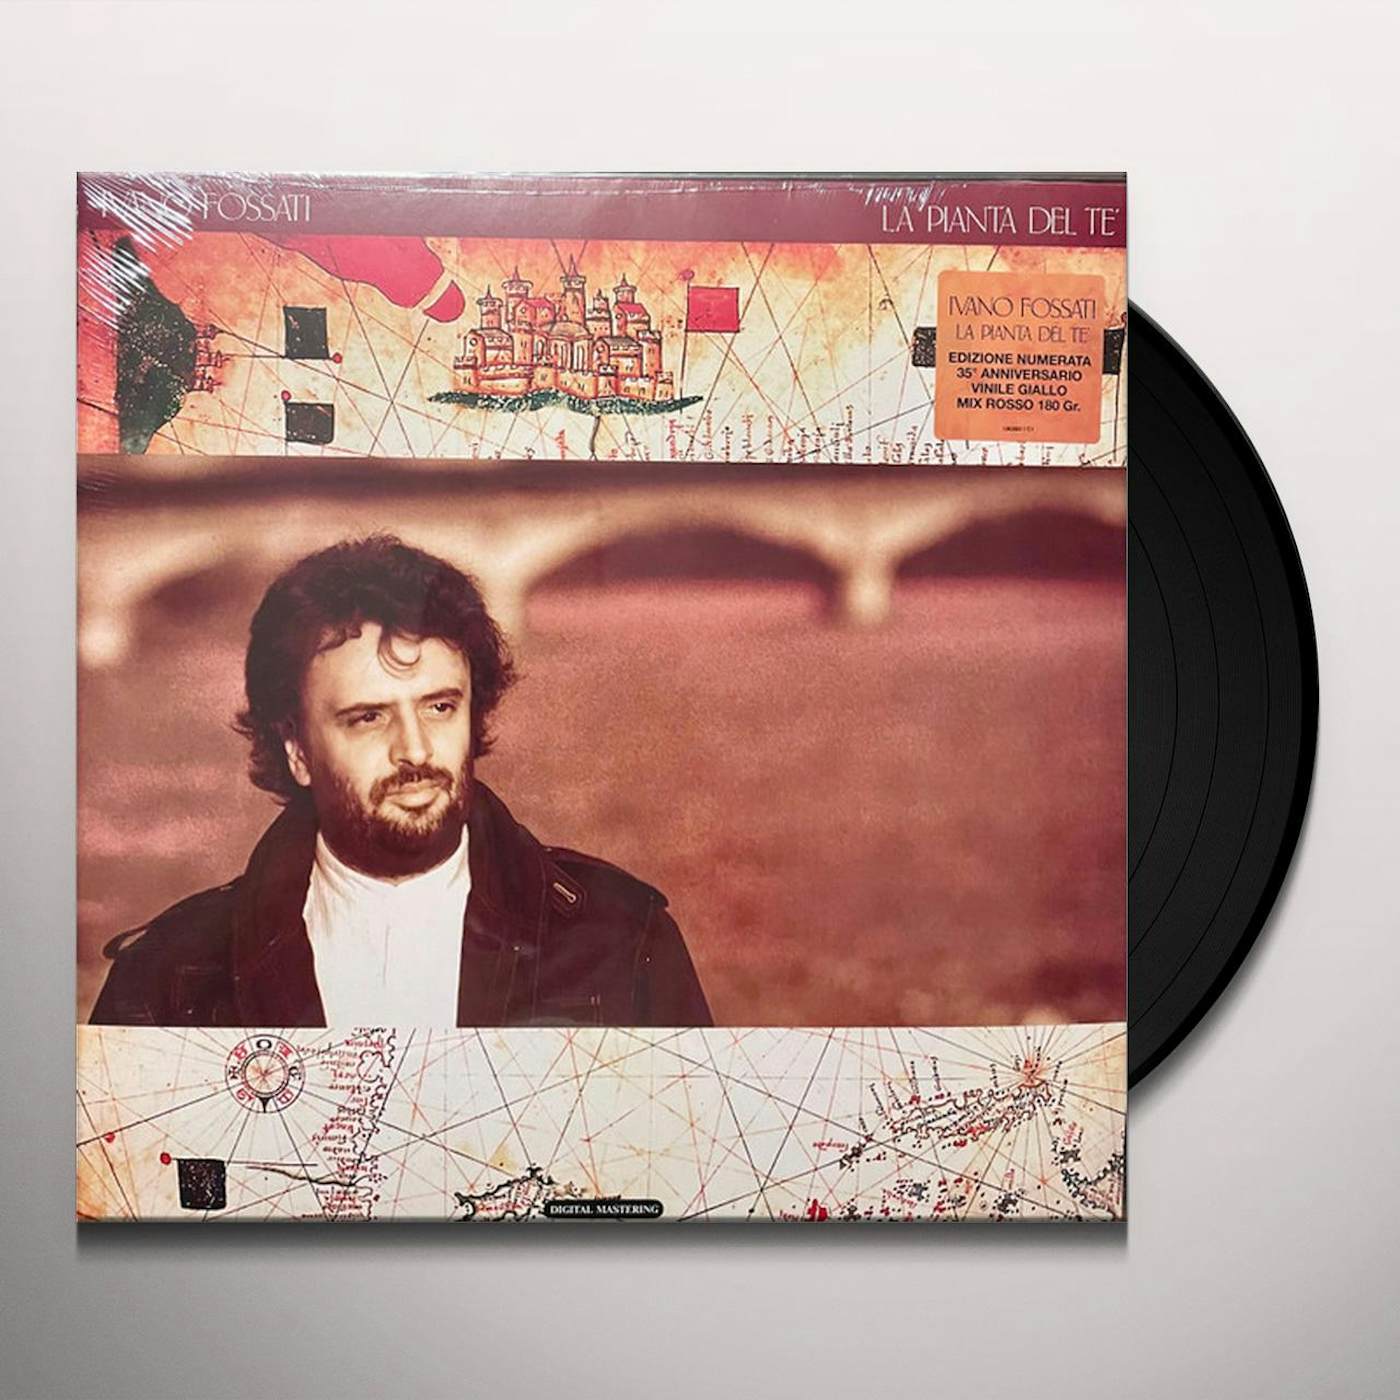 Ivano Fossati LA PIANTA DEL TE Vinyl Record